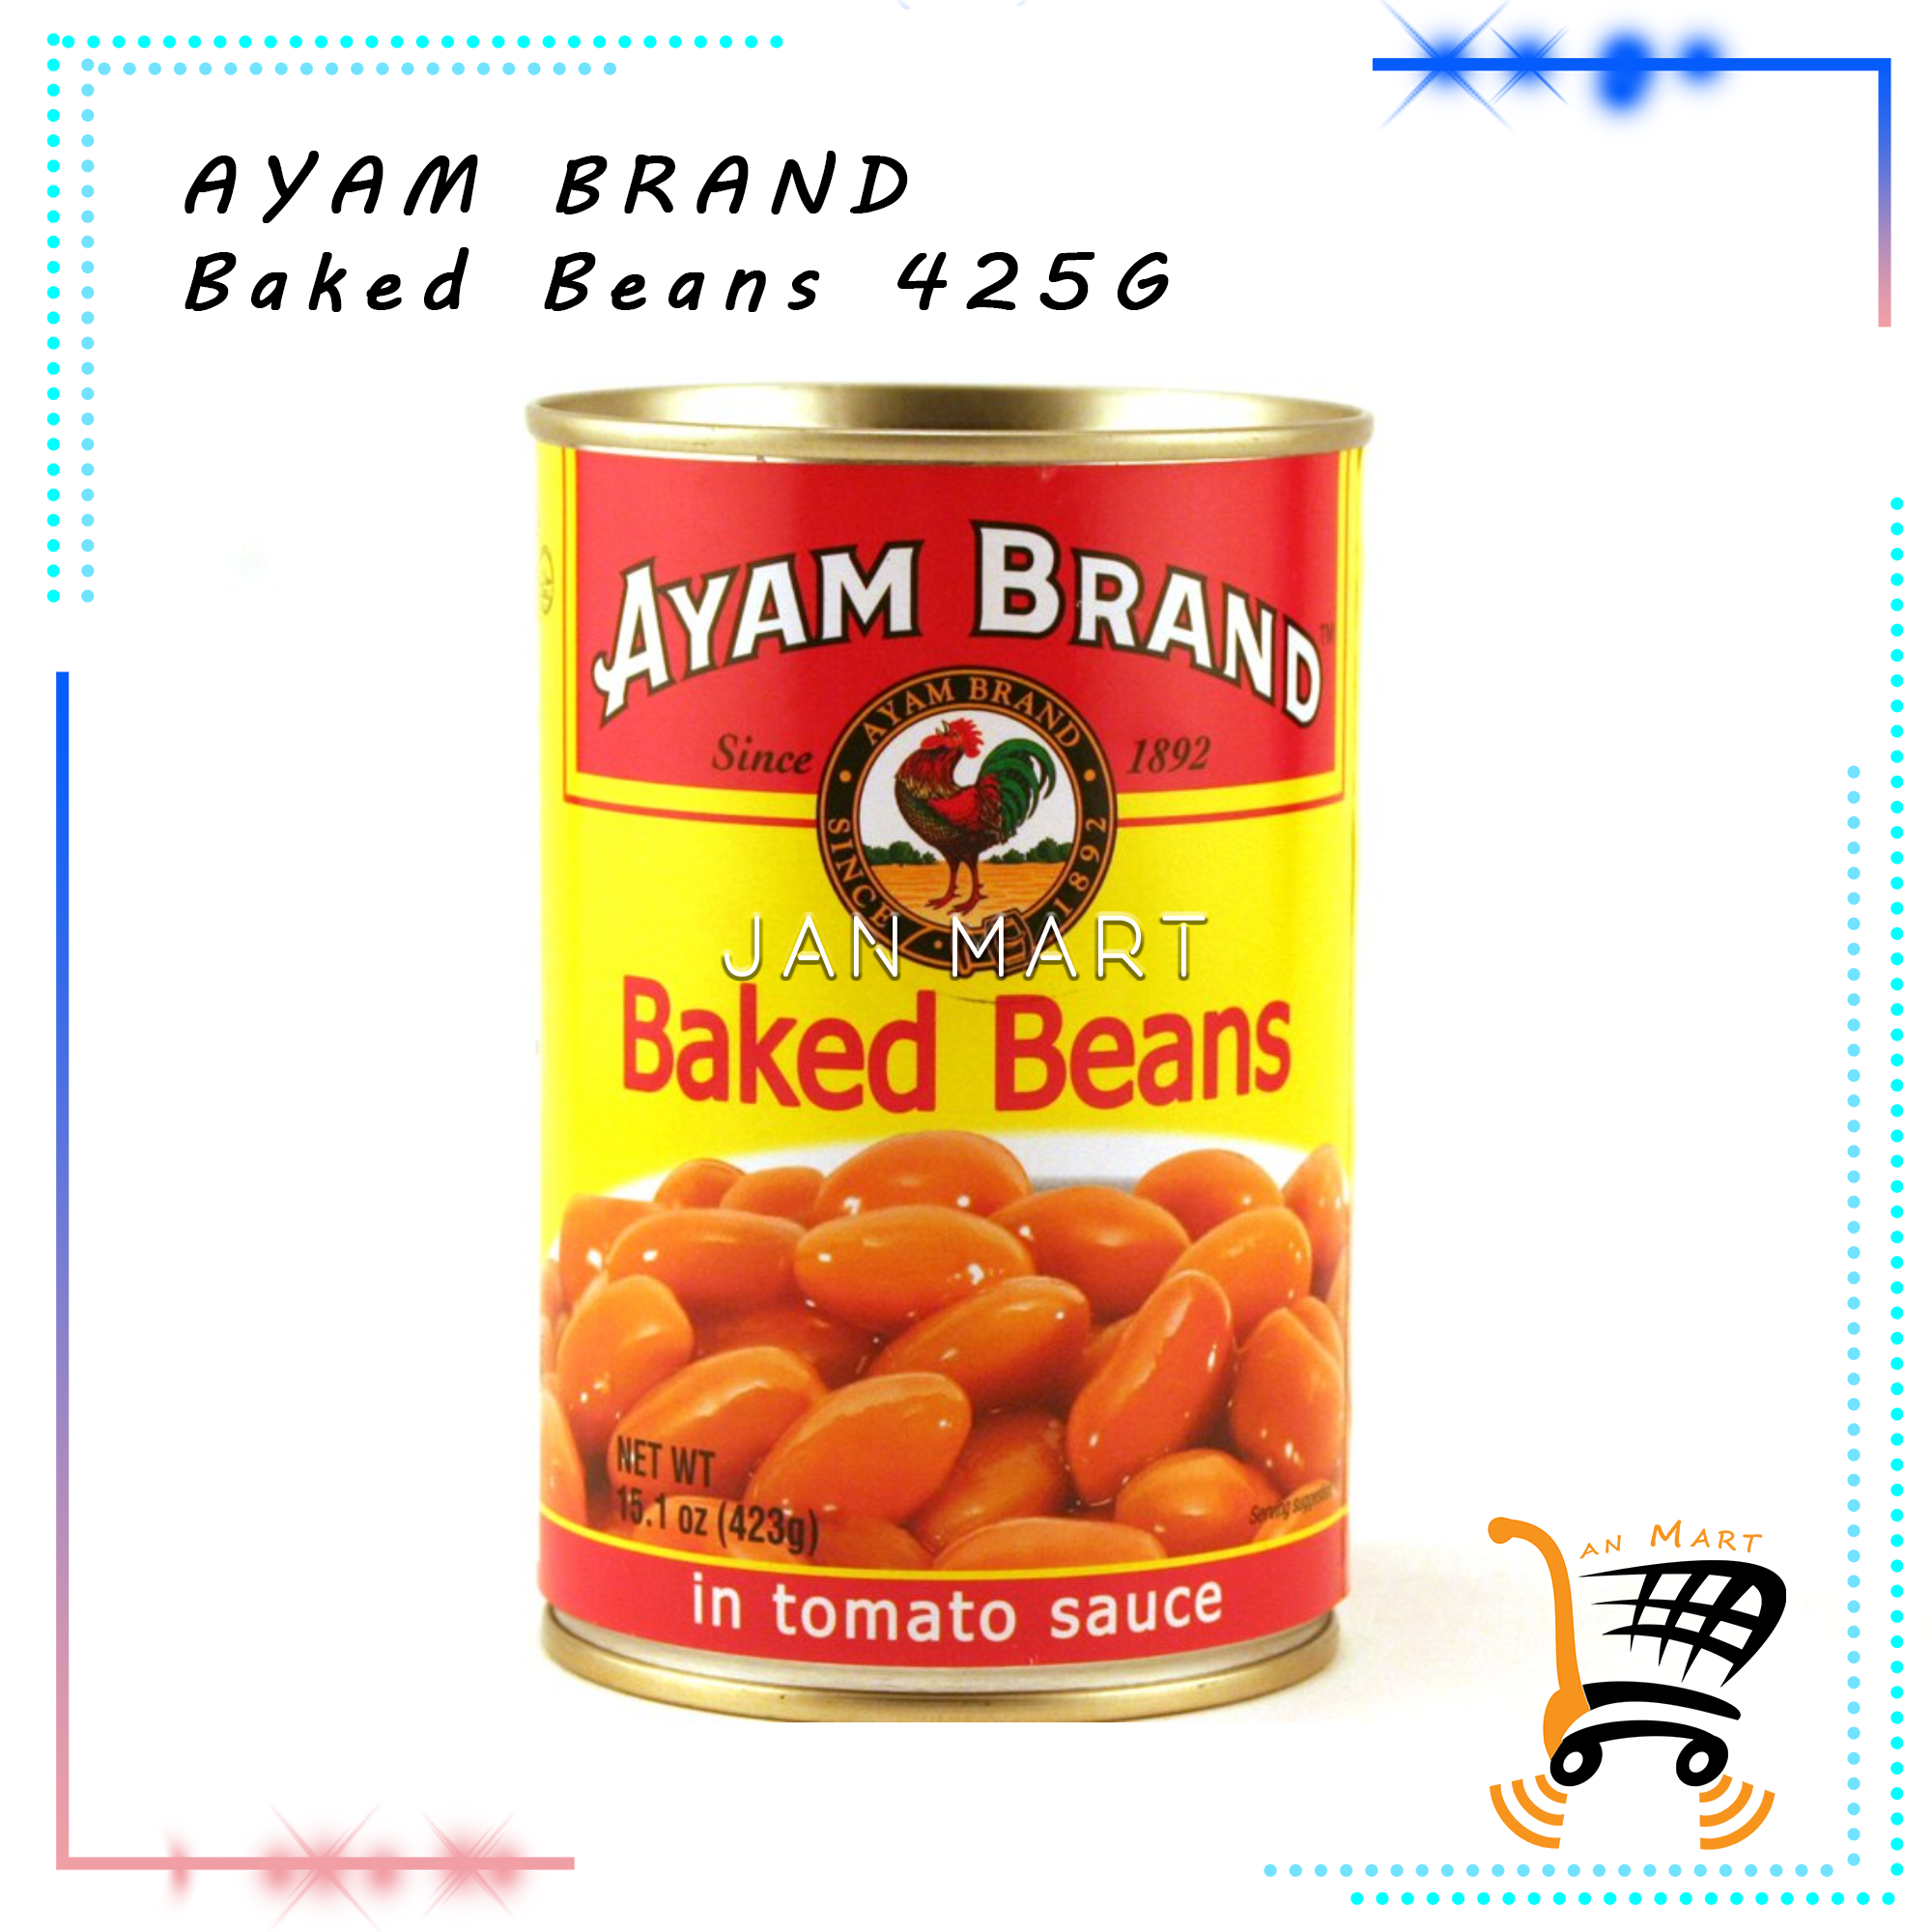 AYAM BRAND Baked Beans 425G